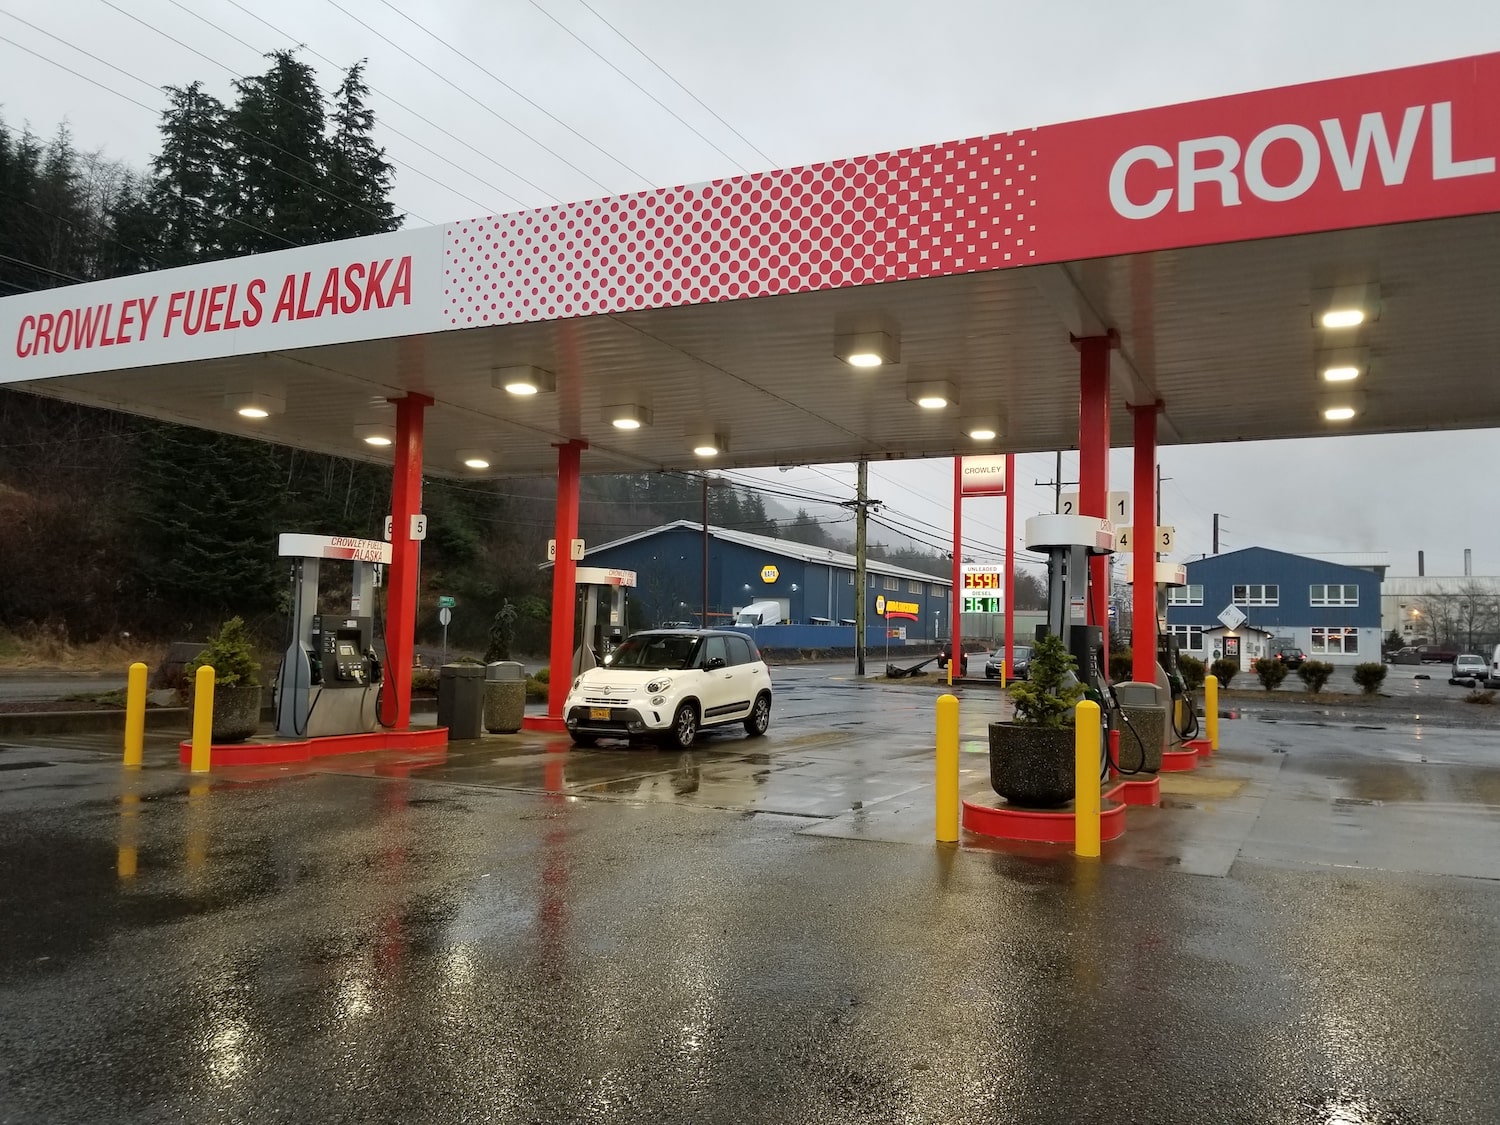 cheap gas station near my location